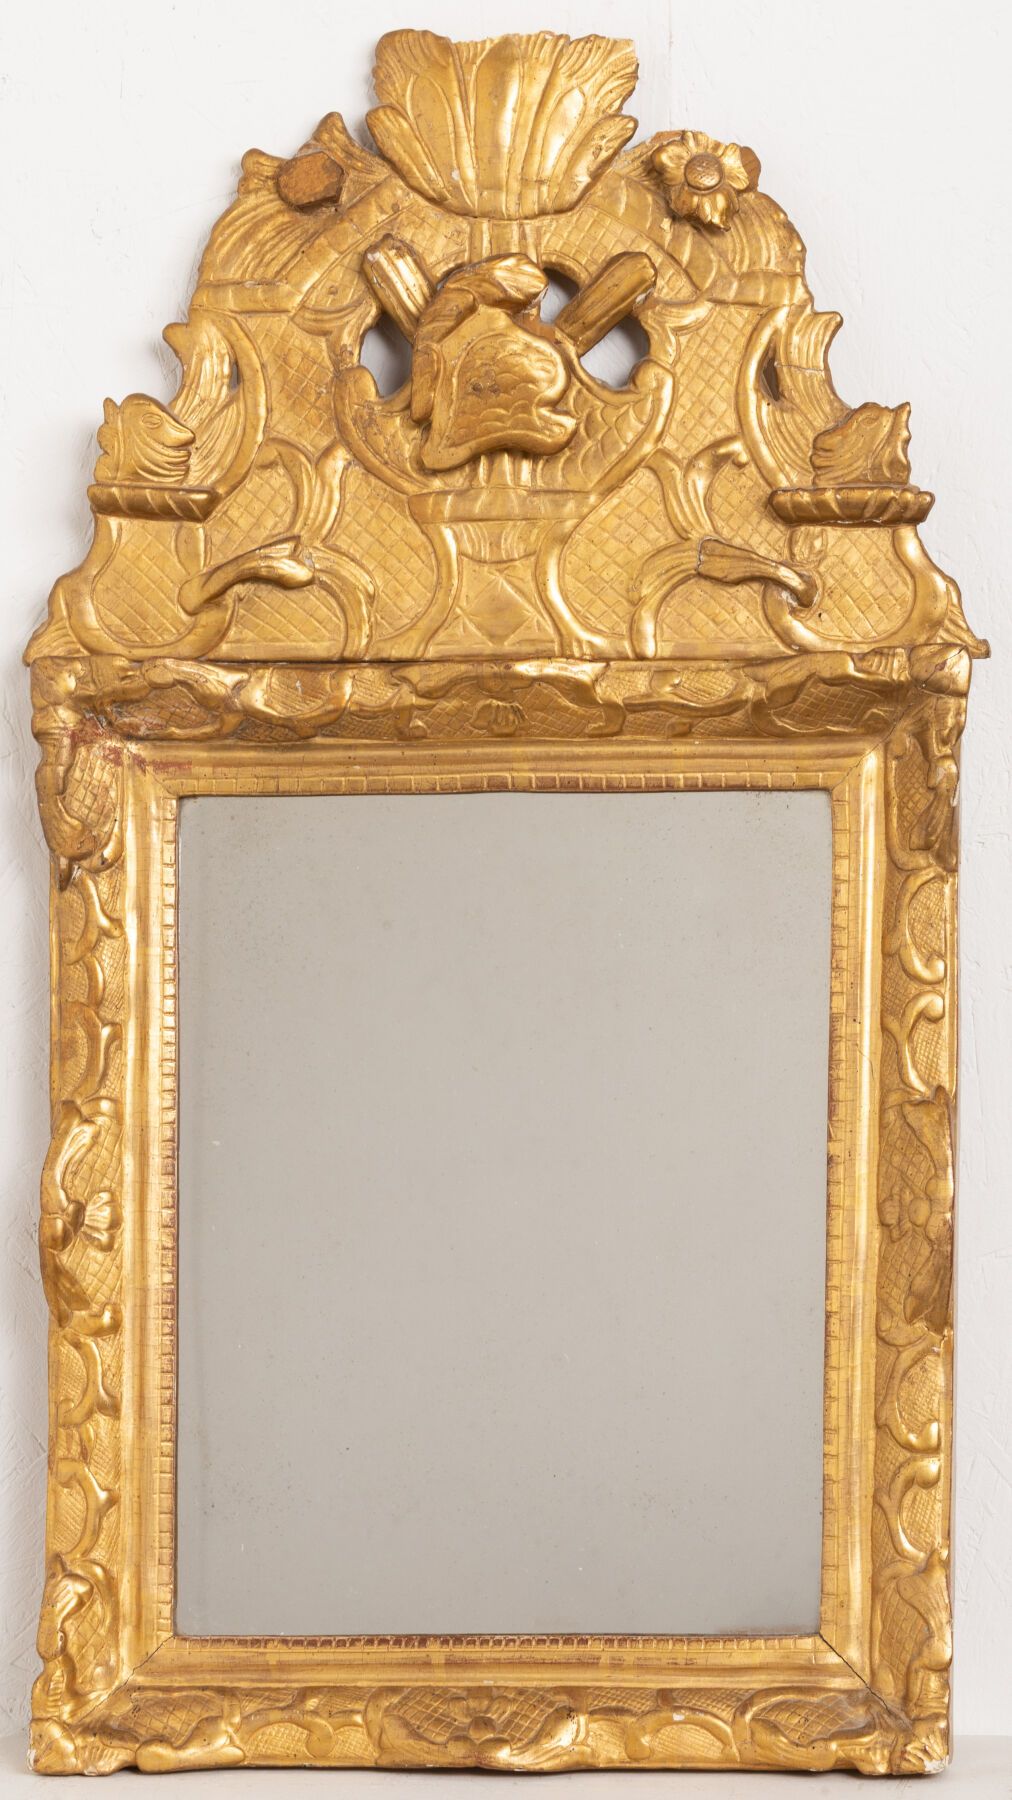 Null 镀金的木制踏板镜，踏板上装饰着鲜花和棕榈叶。
18世纪。
高_102厘米，宽_52.5厘米，轻微事故